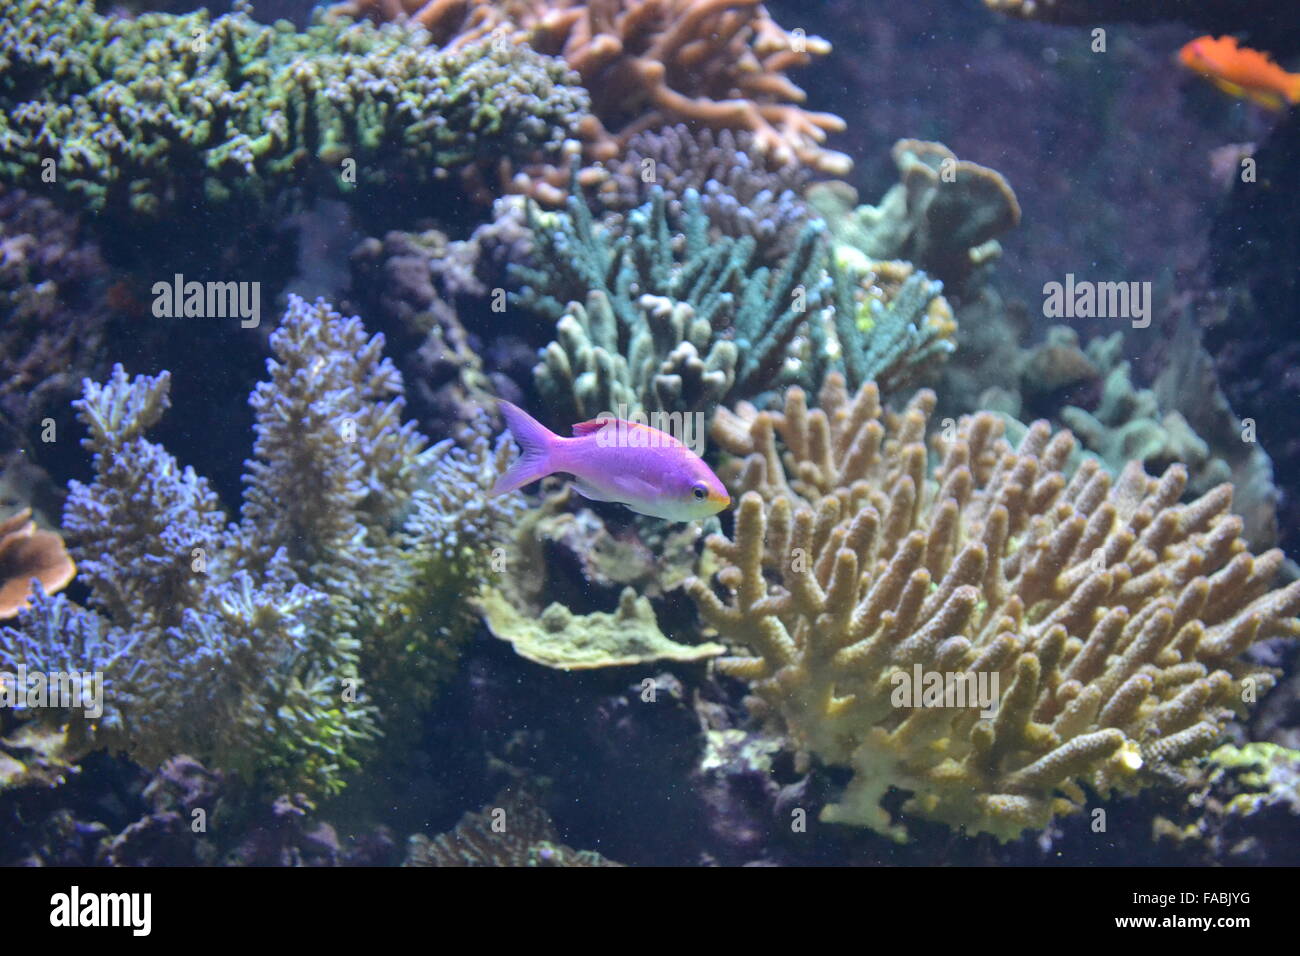 Pink fish swimming in aquarium with corals Stock Photo